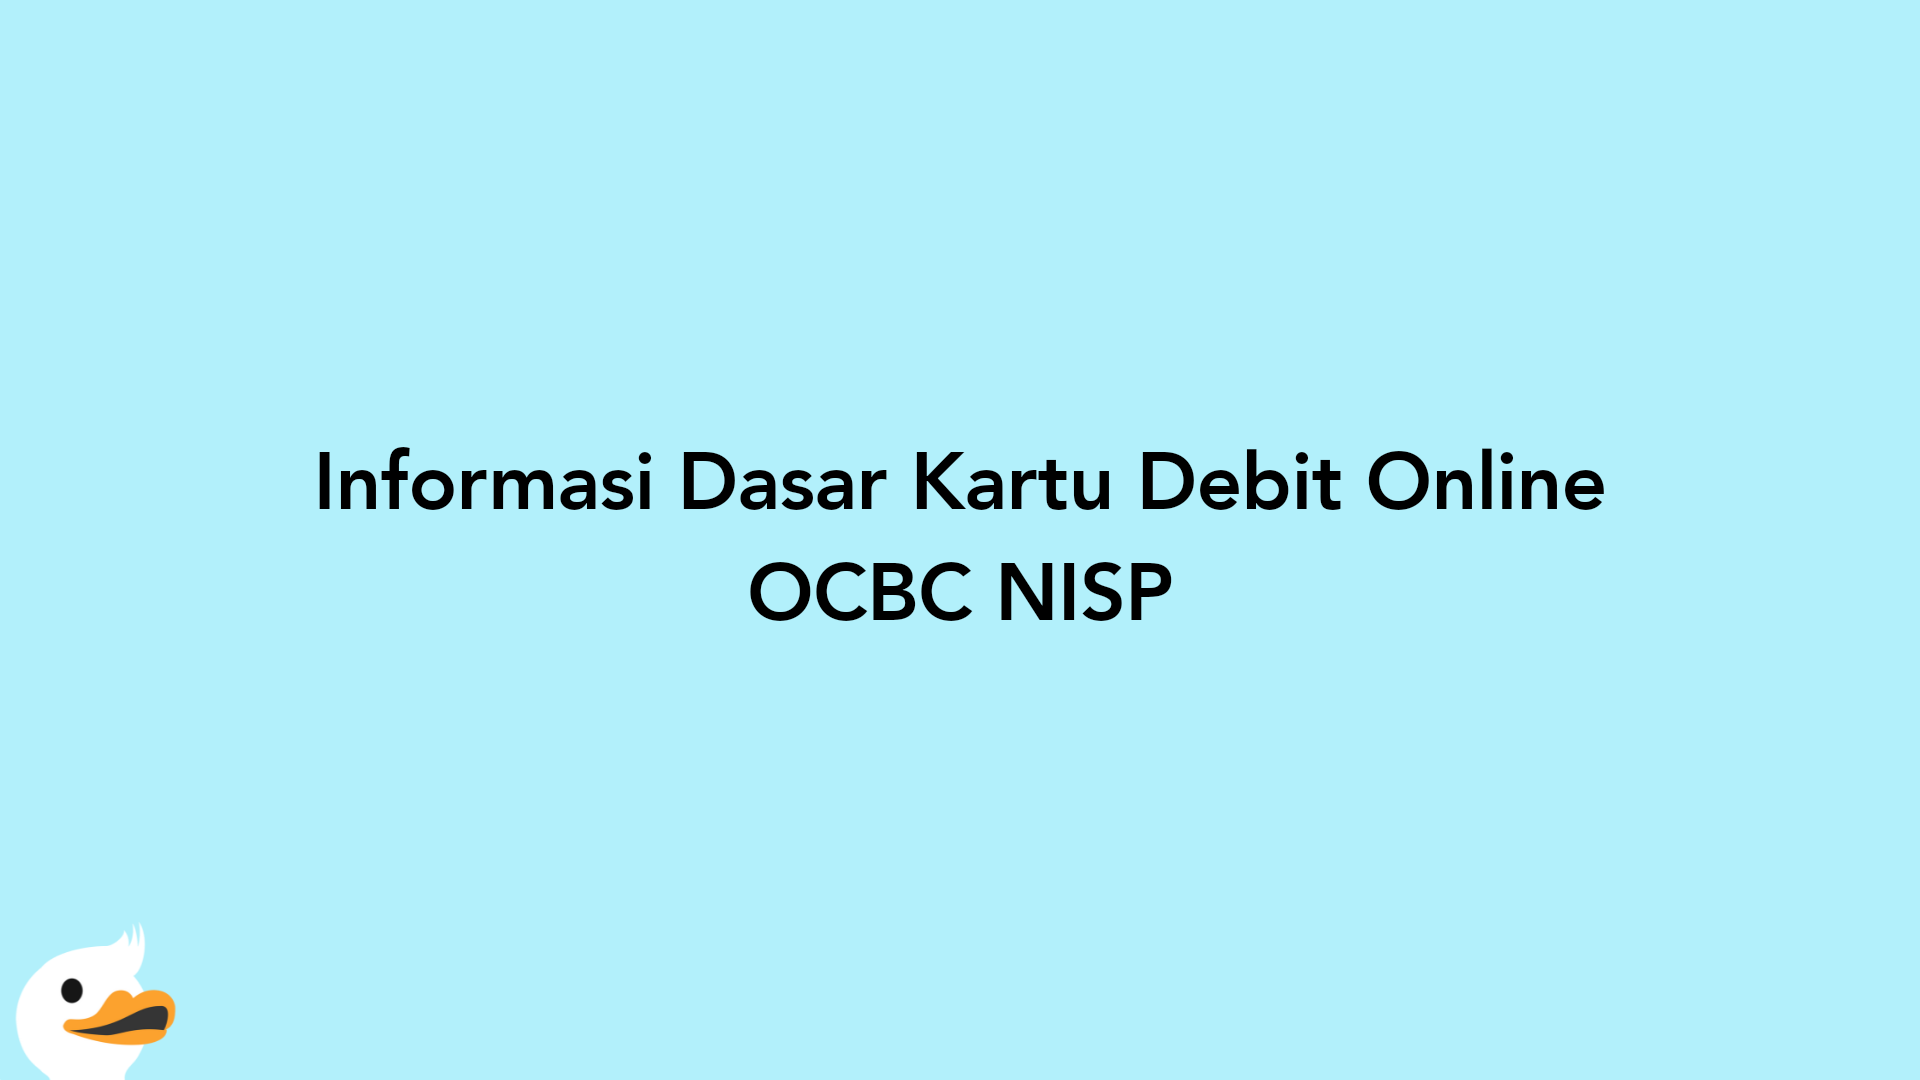 Informasi Dasar Kartu Debit Online OCBC NISP